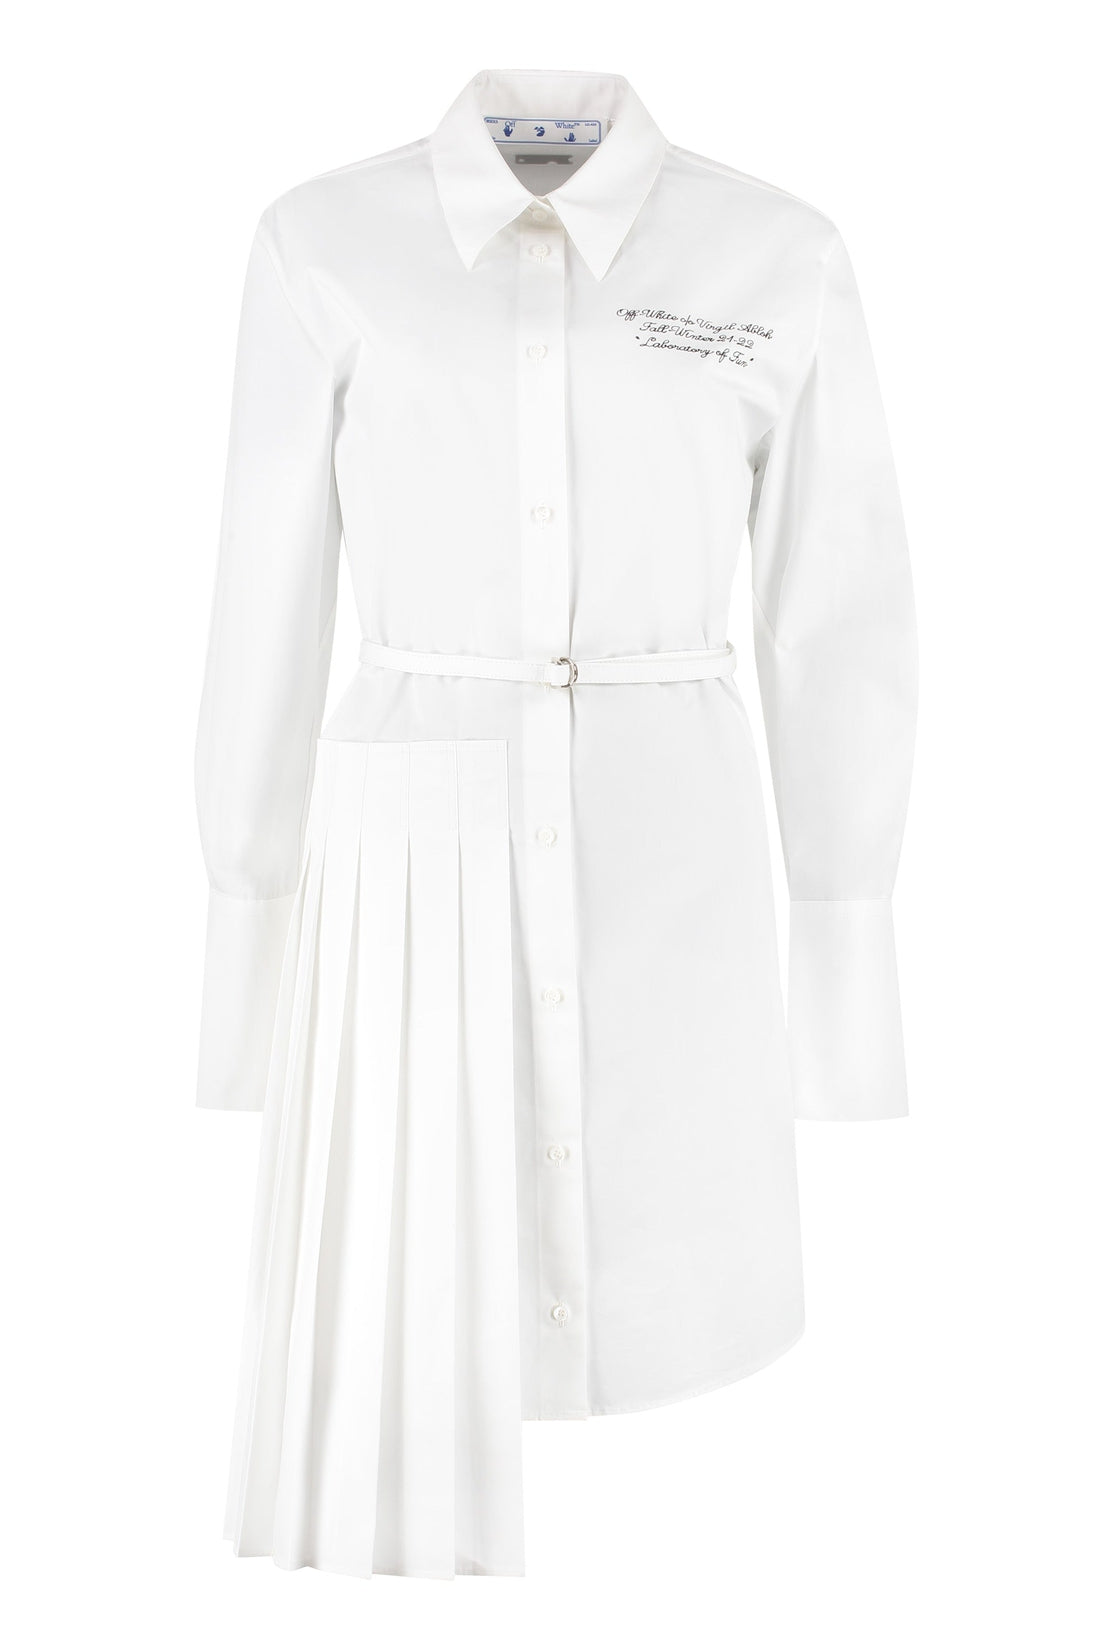 Off-White-OUTLET-SALE-Cotton poplin shirtdress-ARCHIVIST